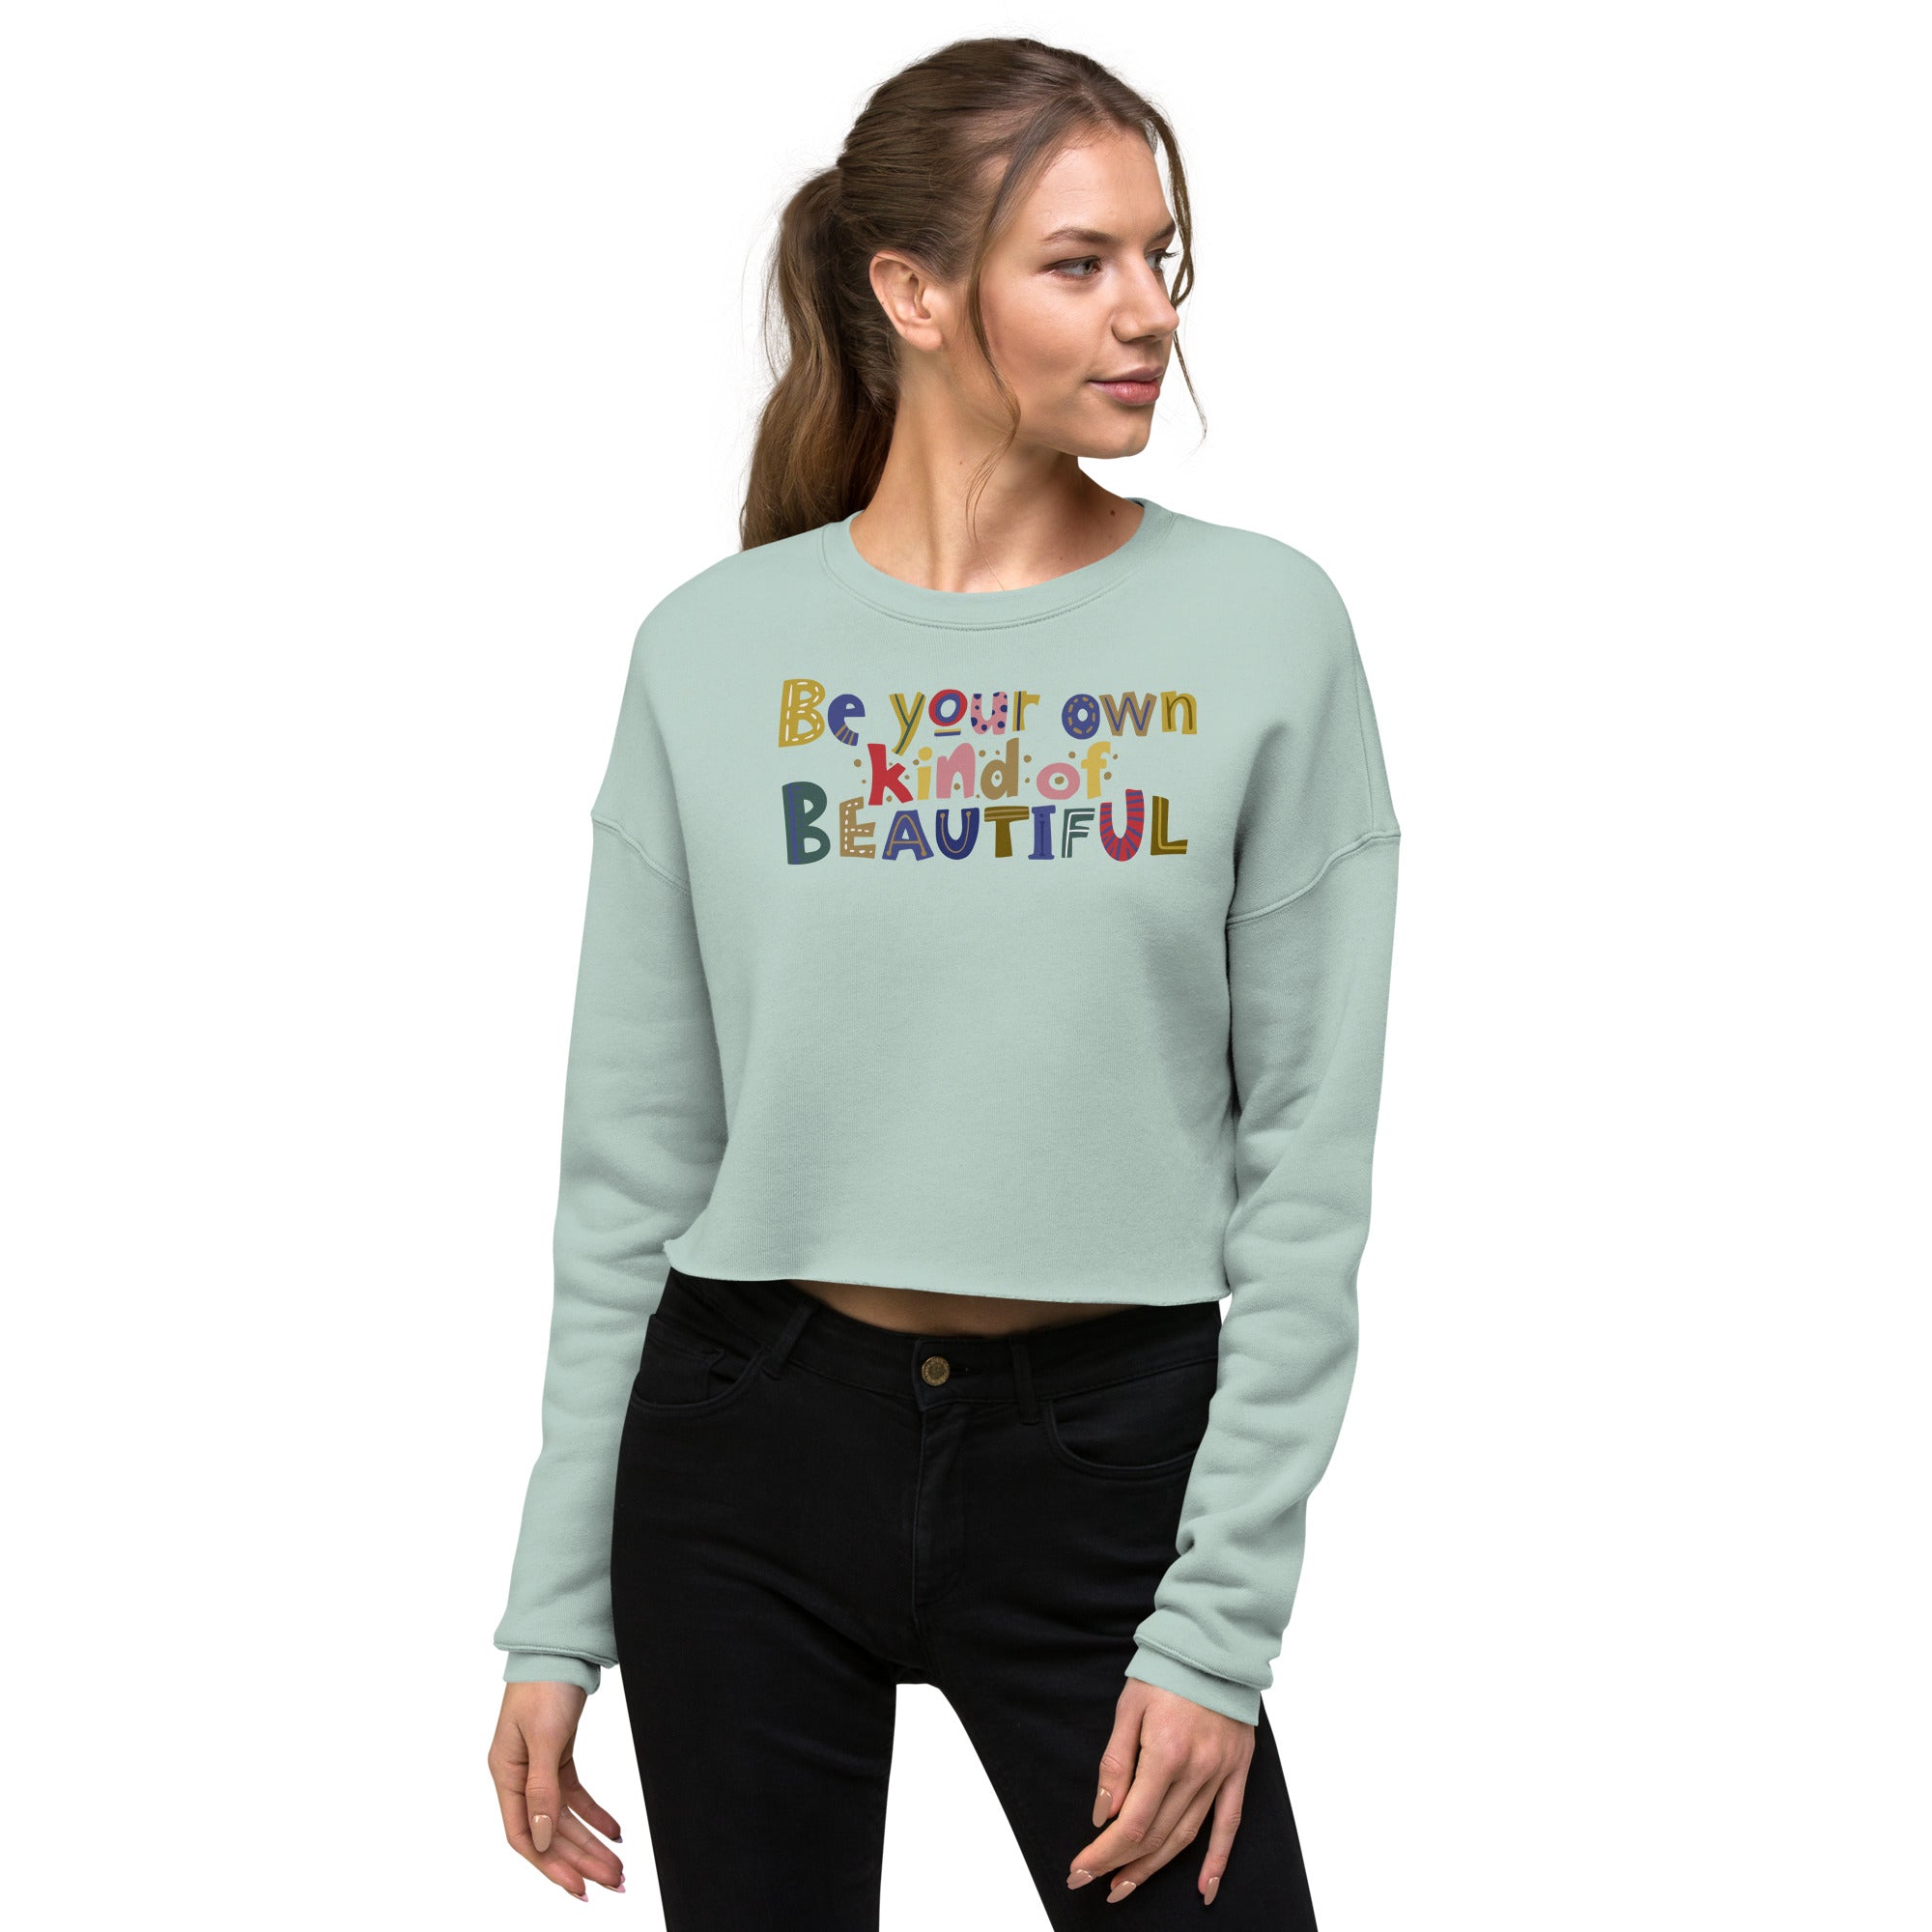 Be Your Own Kind Of Beautiful Crop Sweatshirt